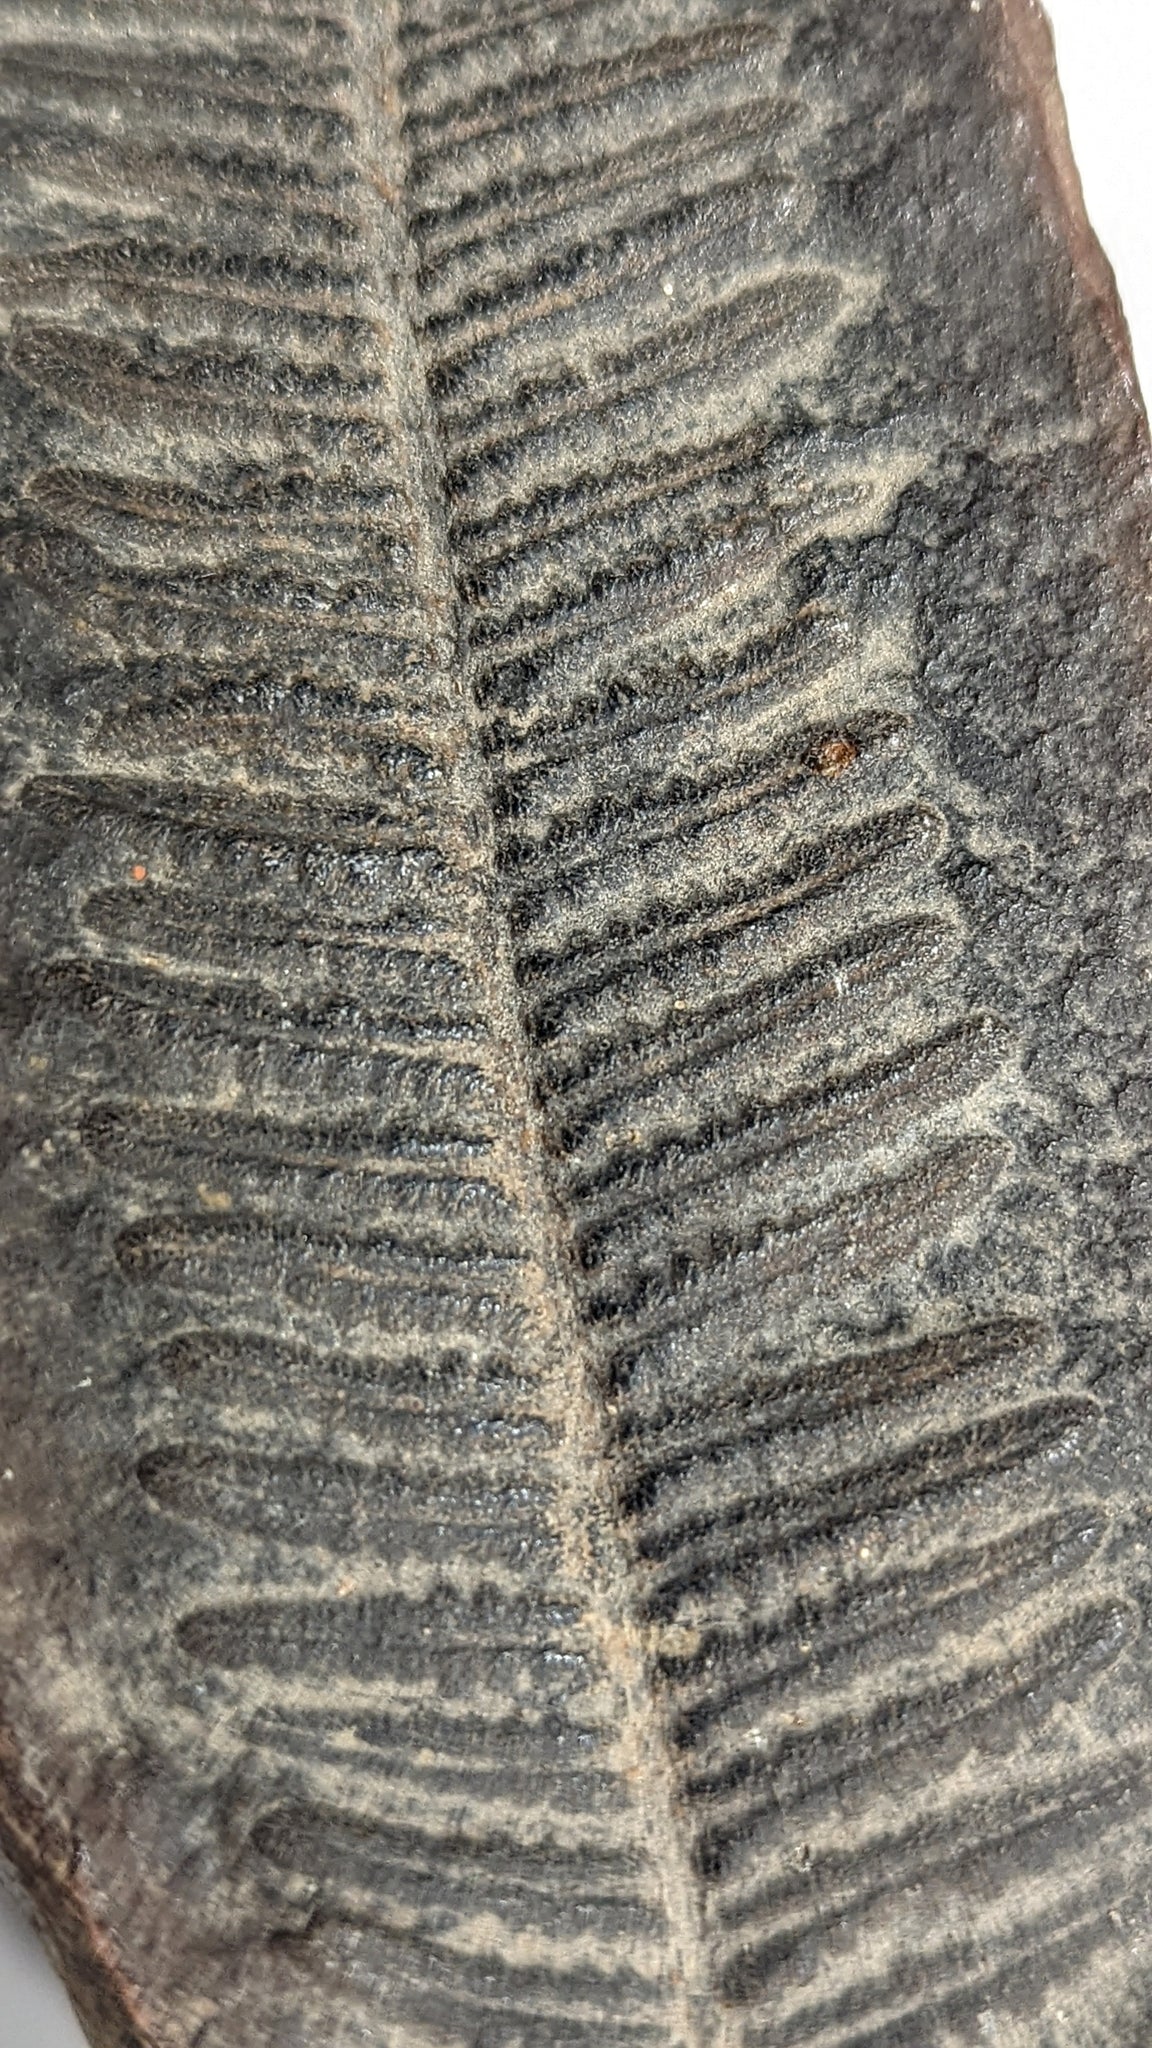 Pennsylvanian Fossilized Fern from Illinois